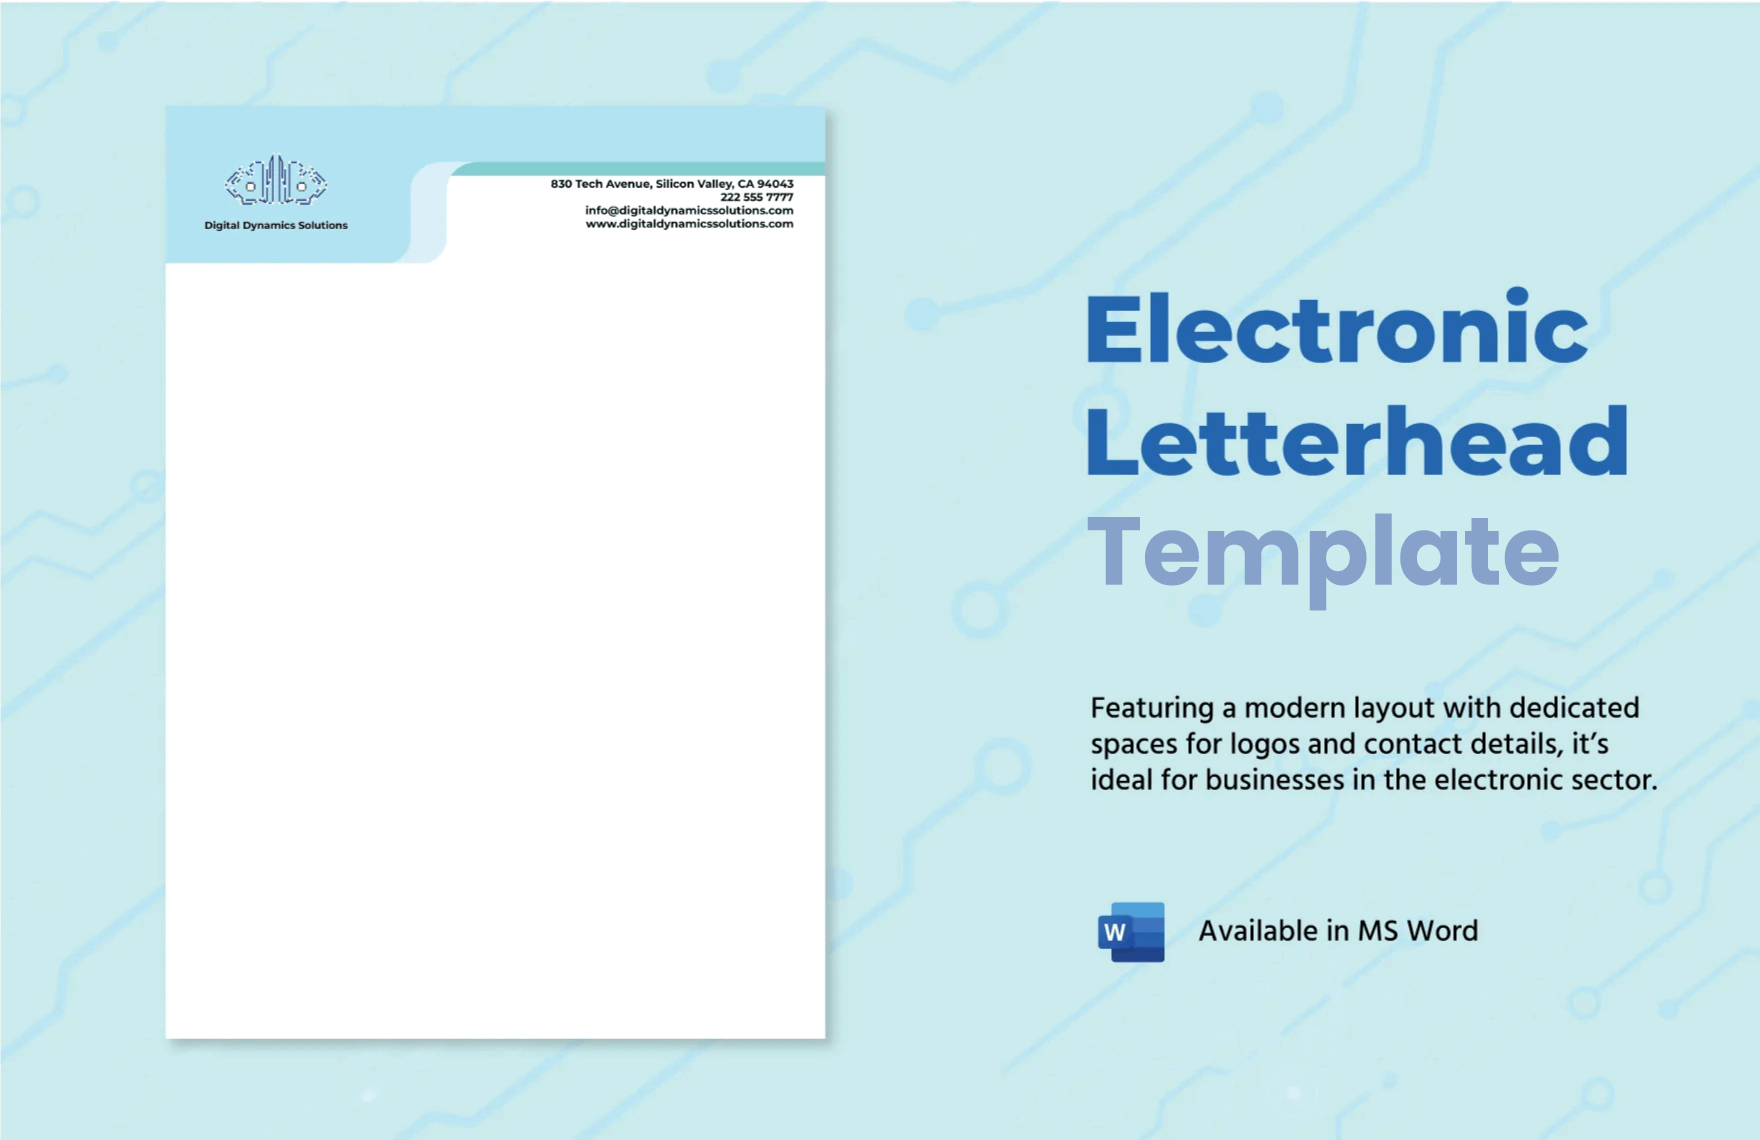 Electronic Letterhead Template